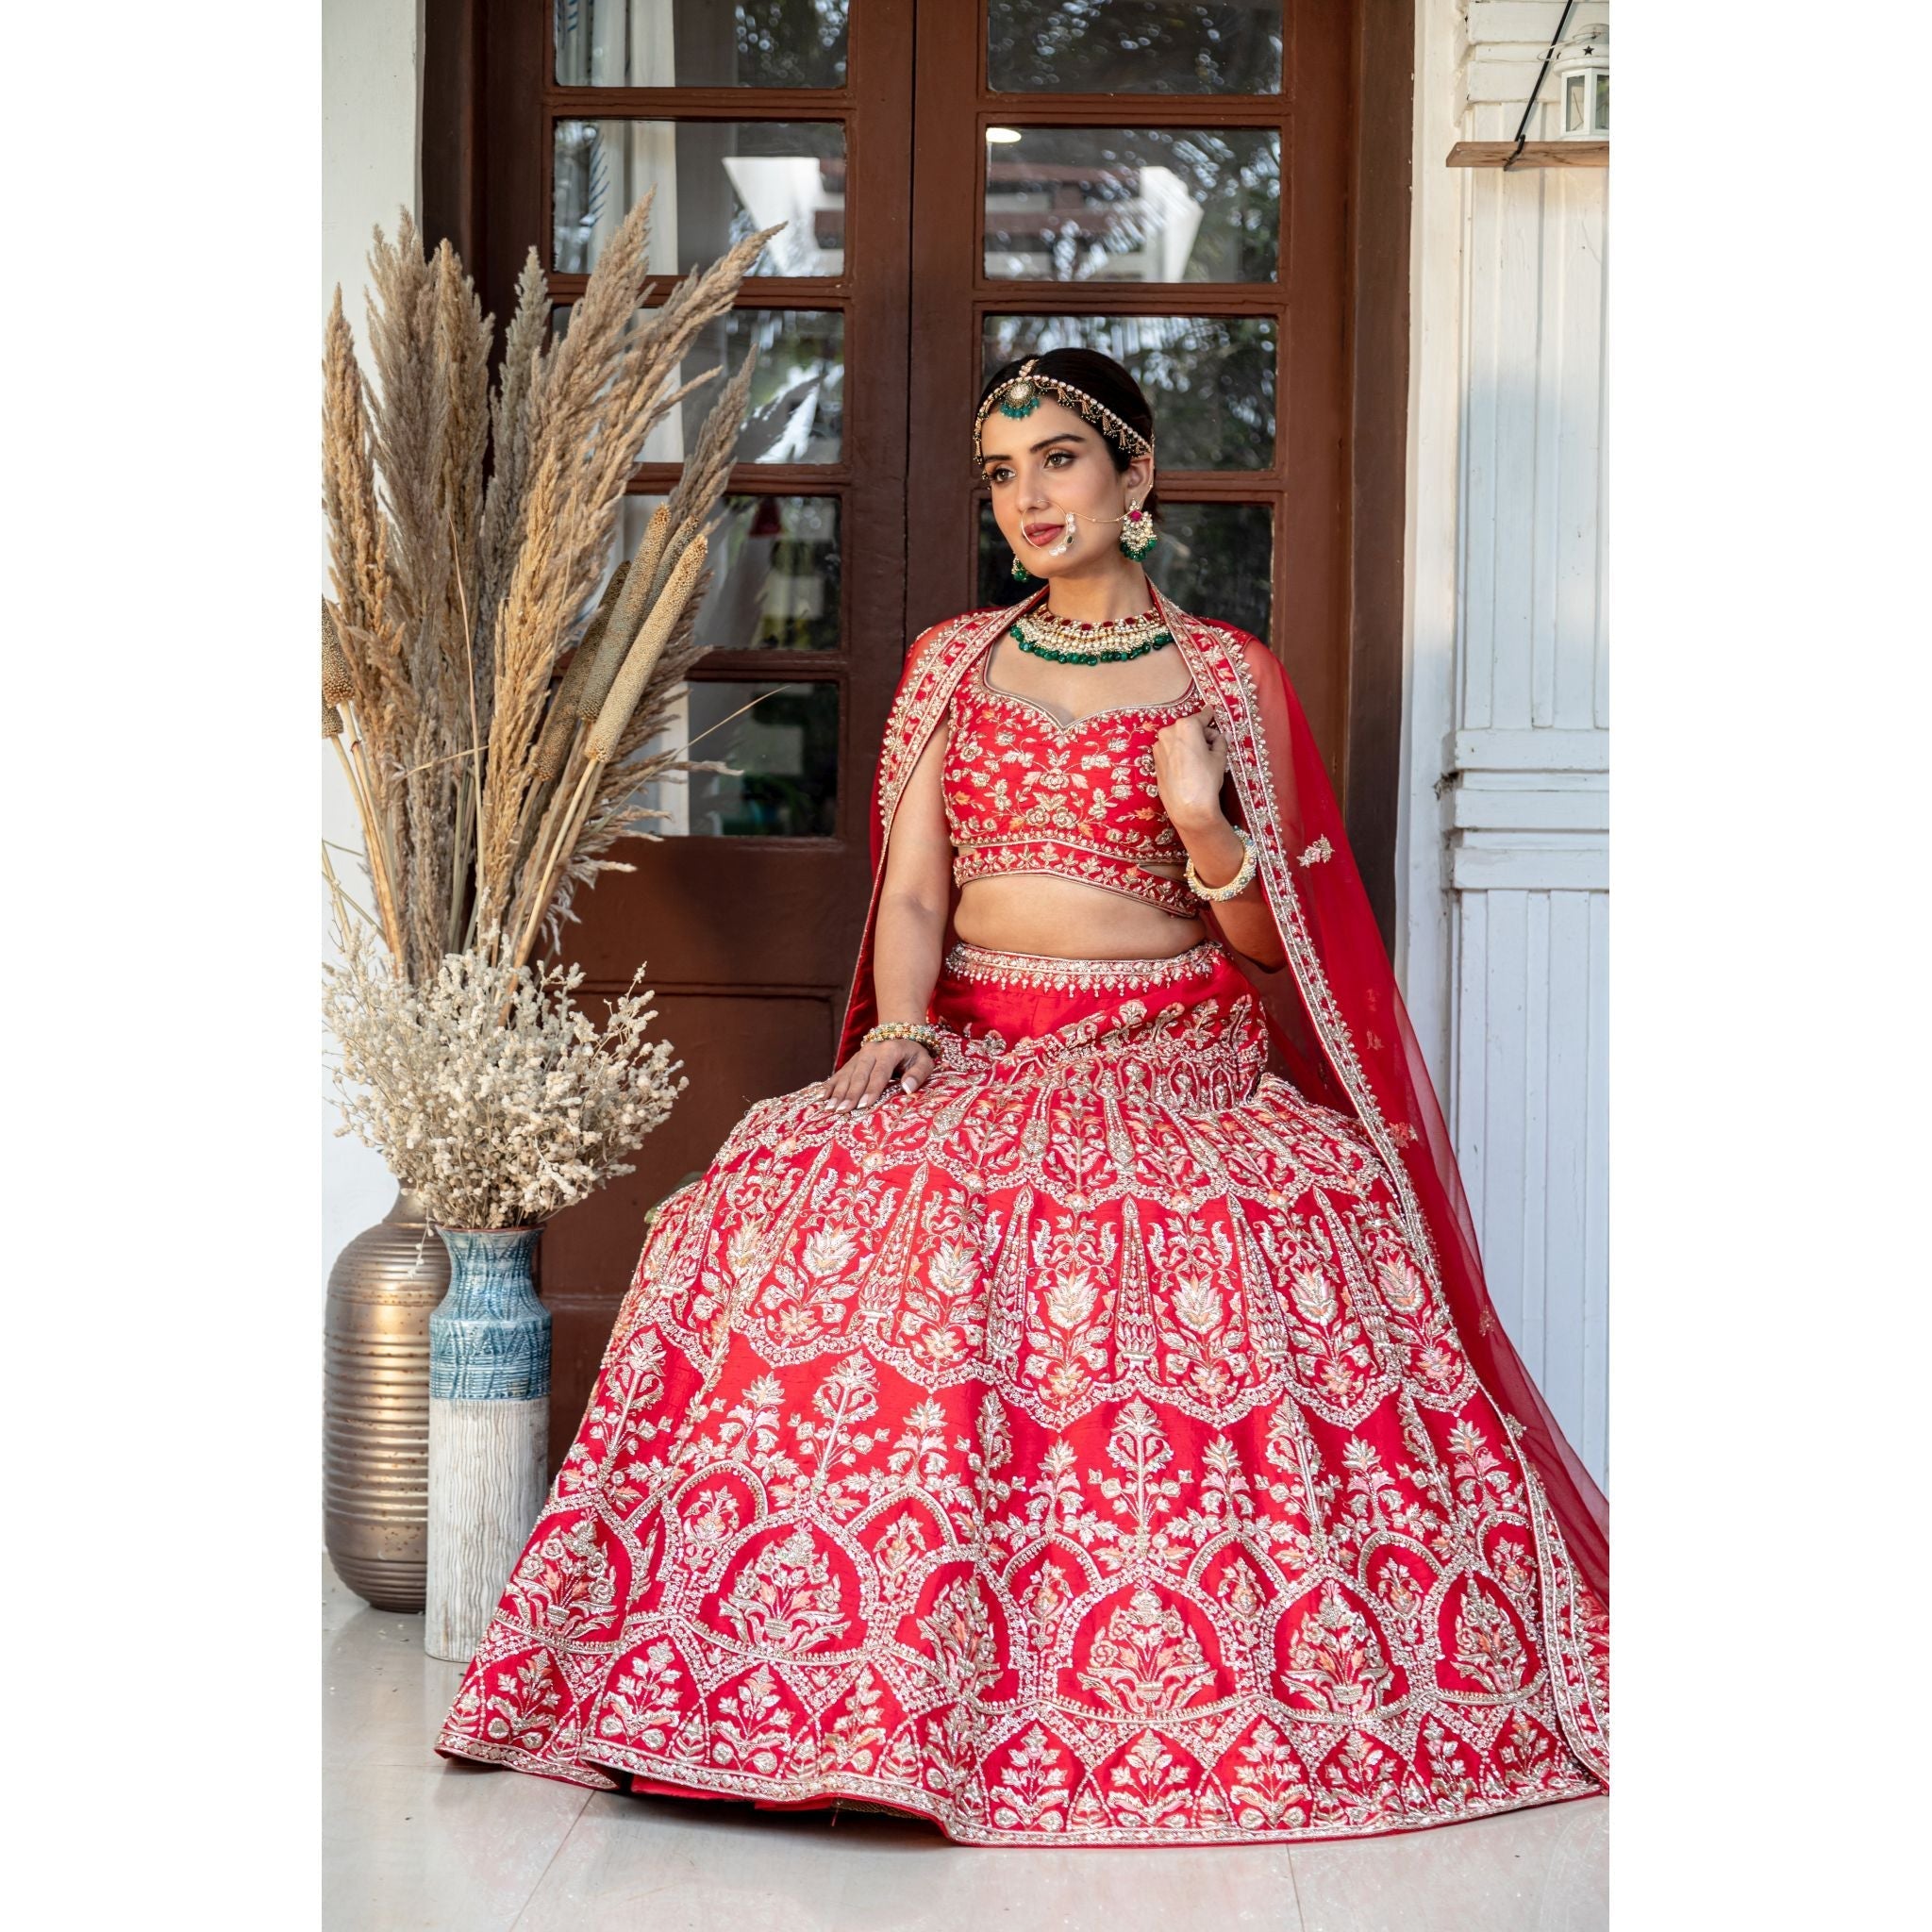 Venetian Red Floral Arch Lehenga Set - Indian Designer Bridal Wedding Outfit